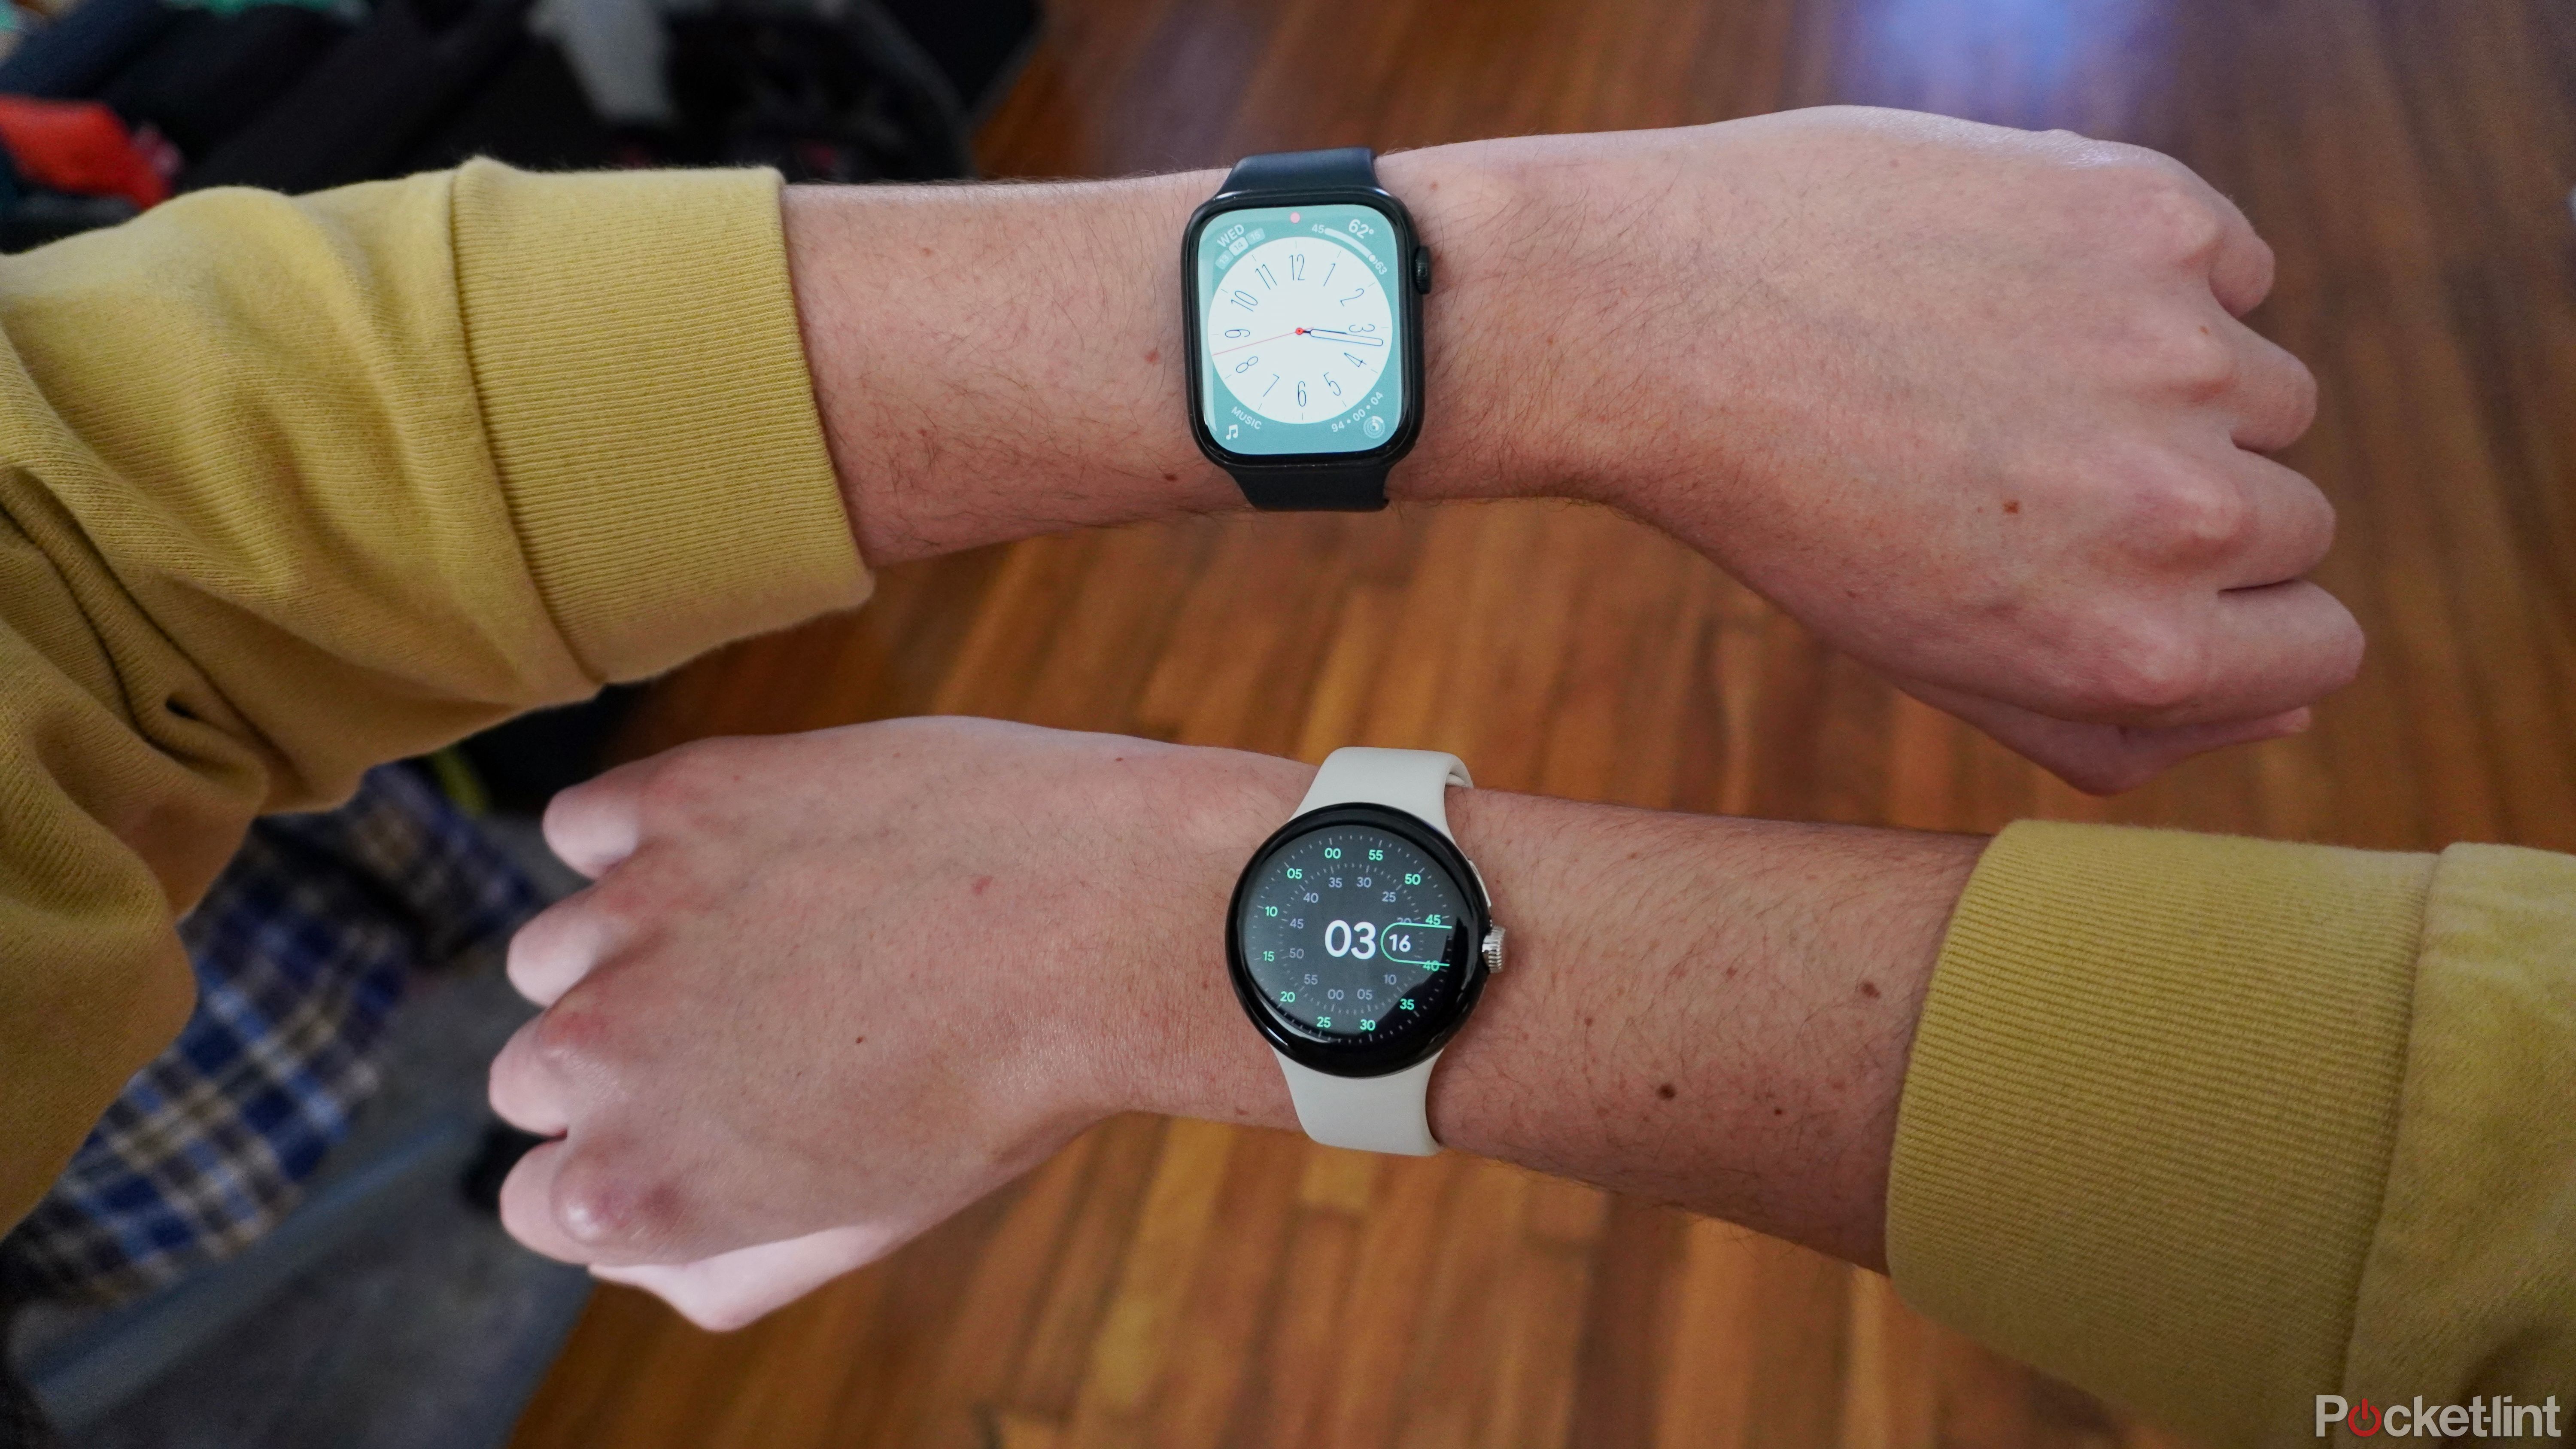 One wrist wearing an Apple Watch over another wrist wearing a Pixel Watch.